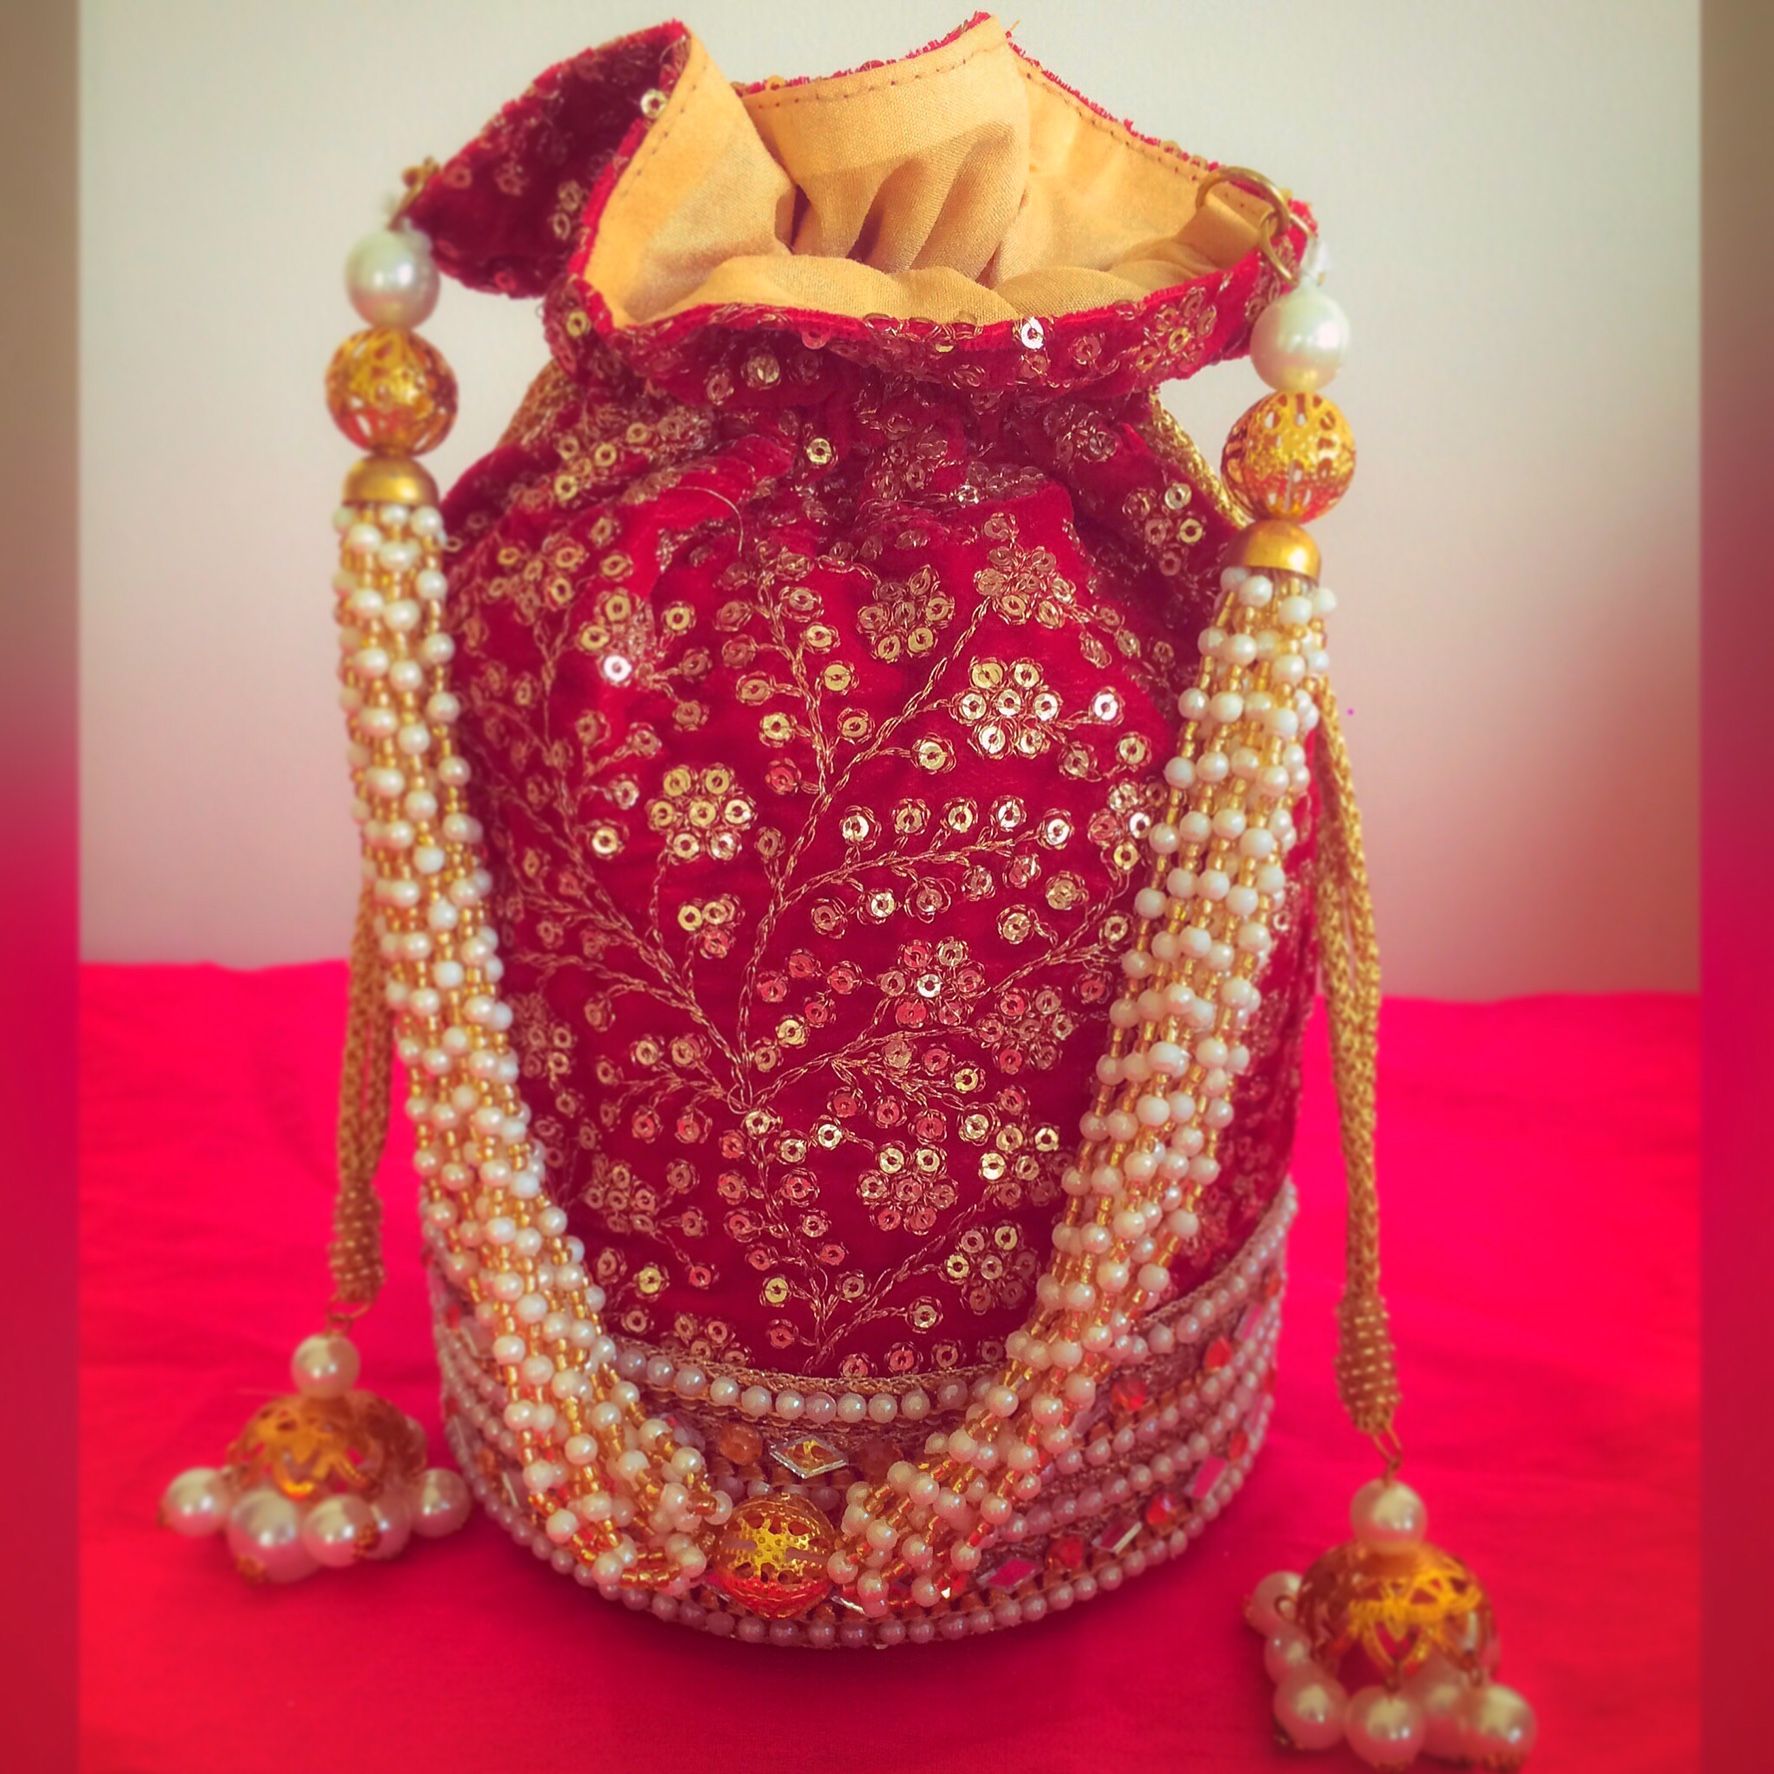 potli bags for weddings, handmade potli bags, potli pouch bags, designer  poytli bag, - YouTube